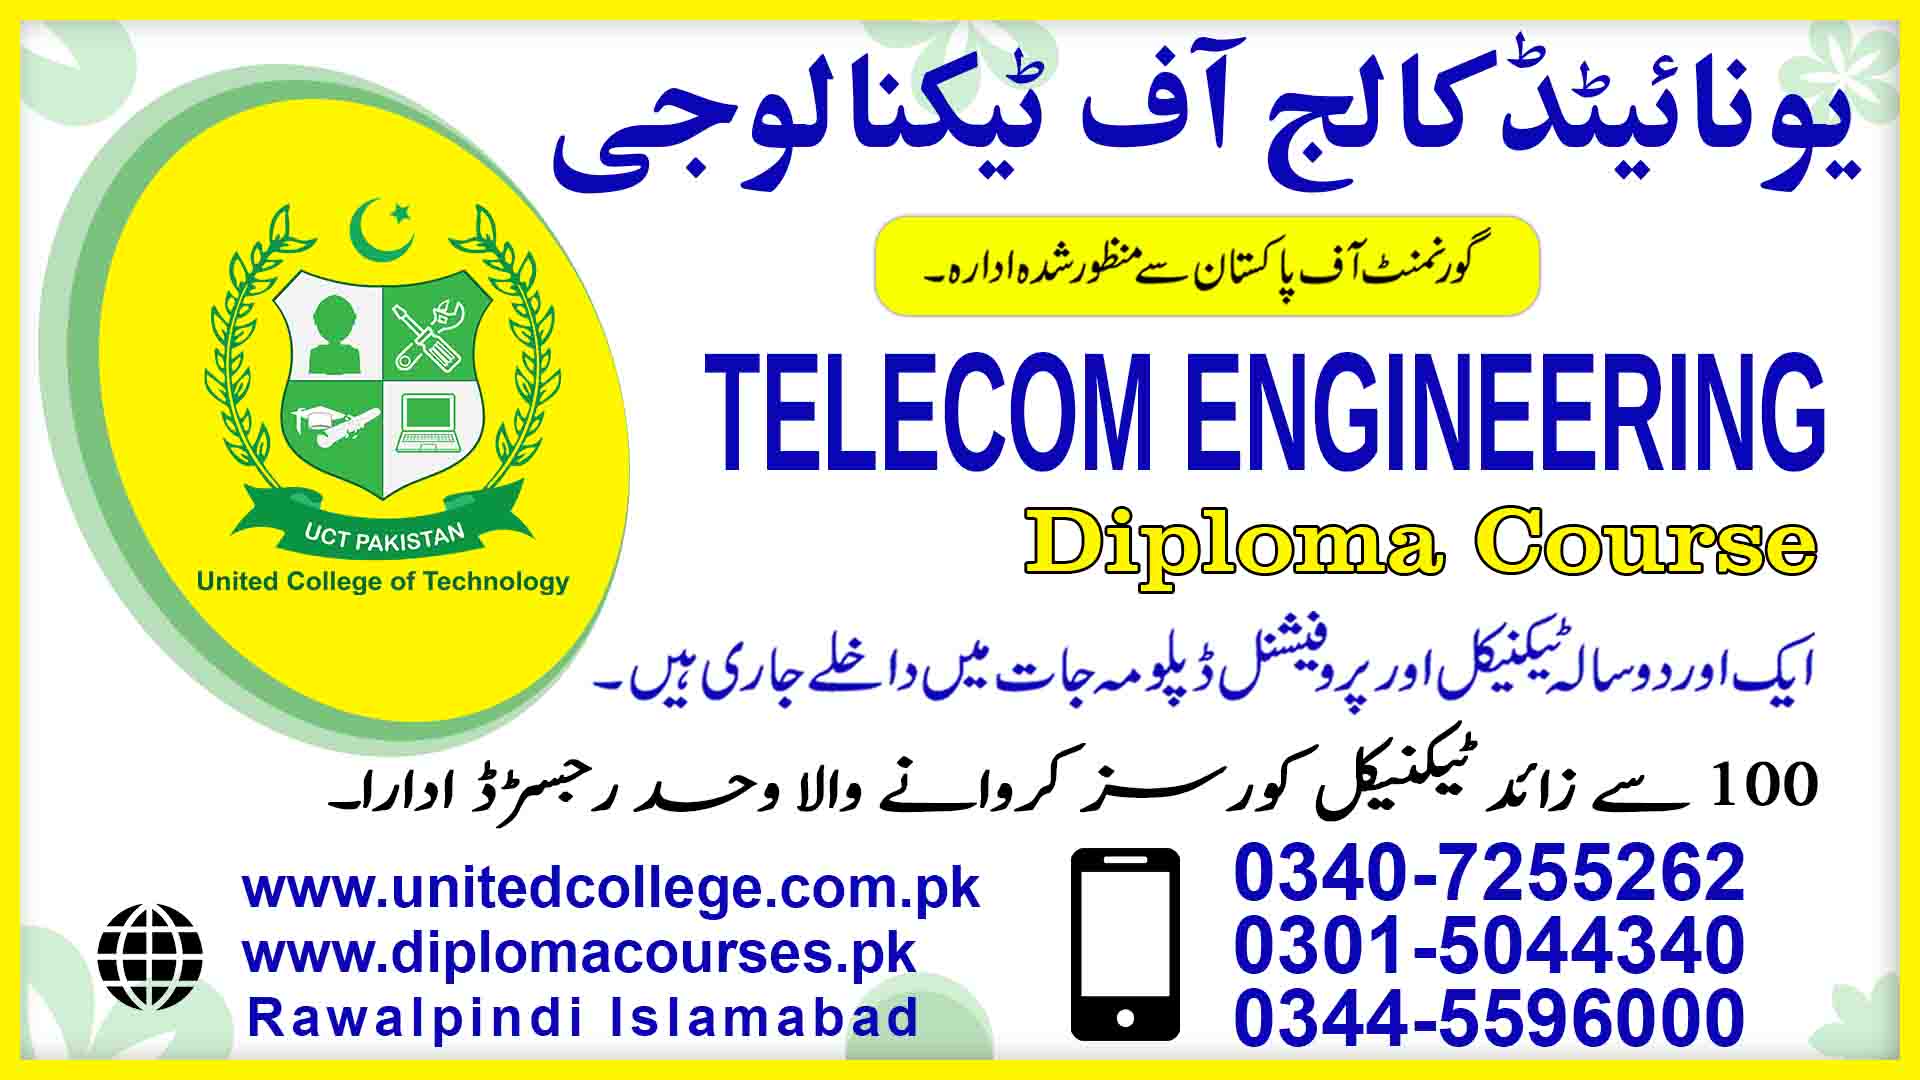 TELECOM ENGINEERING COURSE COURSE IN RAWALPINDI ISLAMABAD PAKISTAN